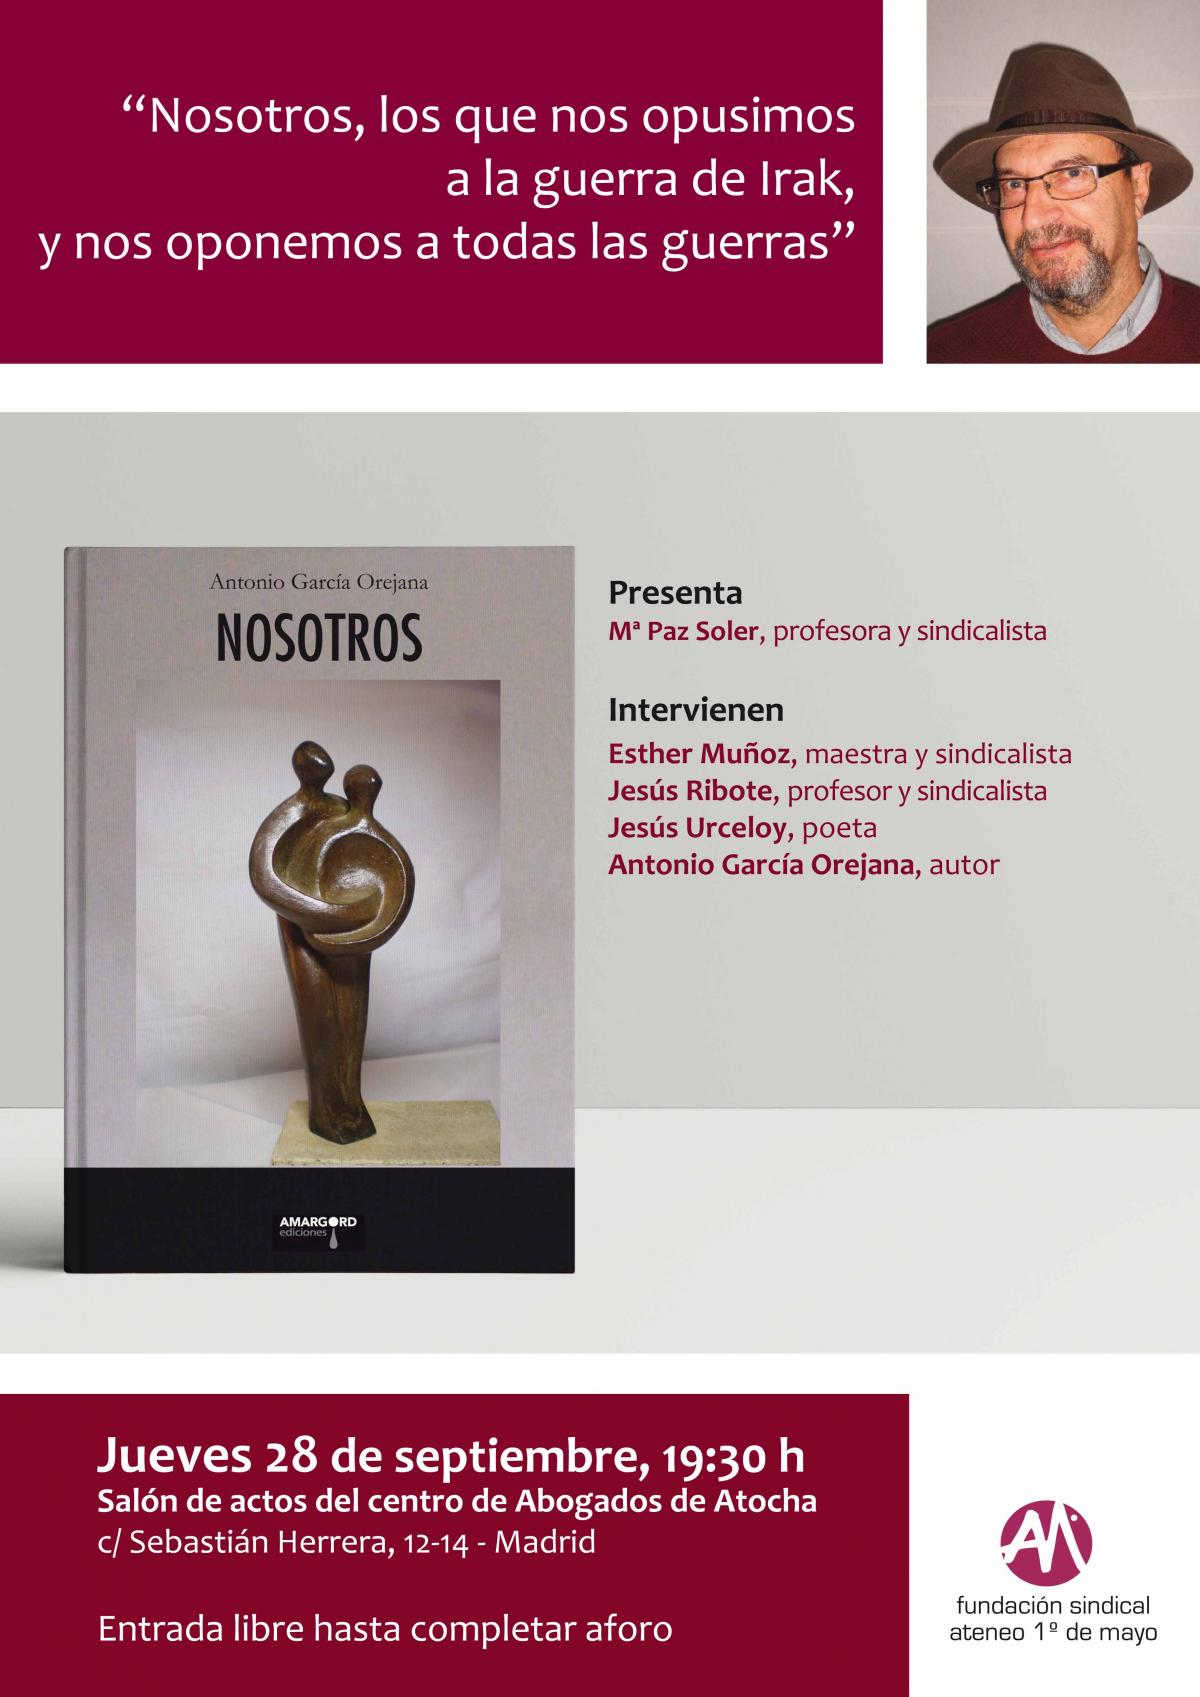 Presentaci�n del libro "Nosotros", de A. Garc�a Orejana